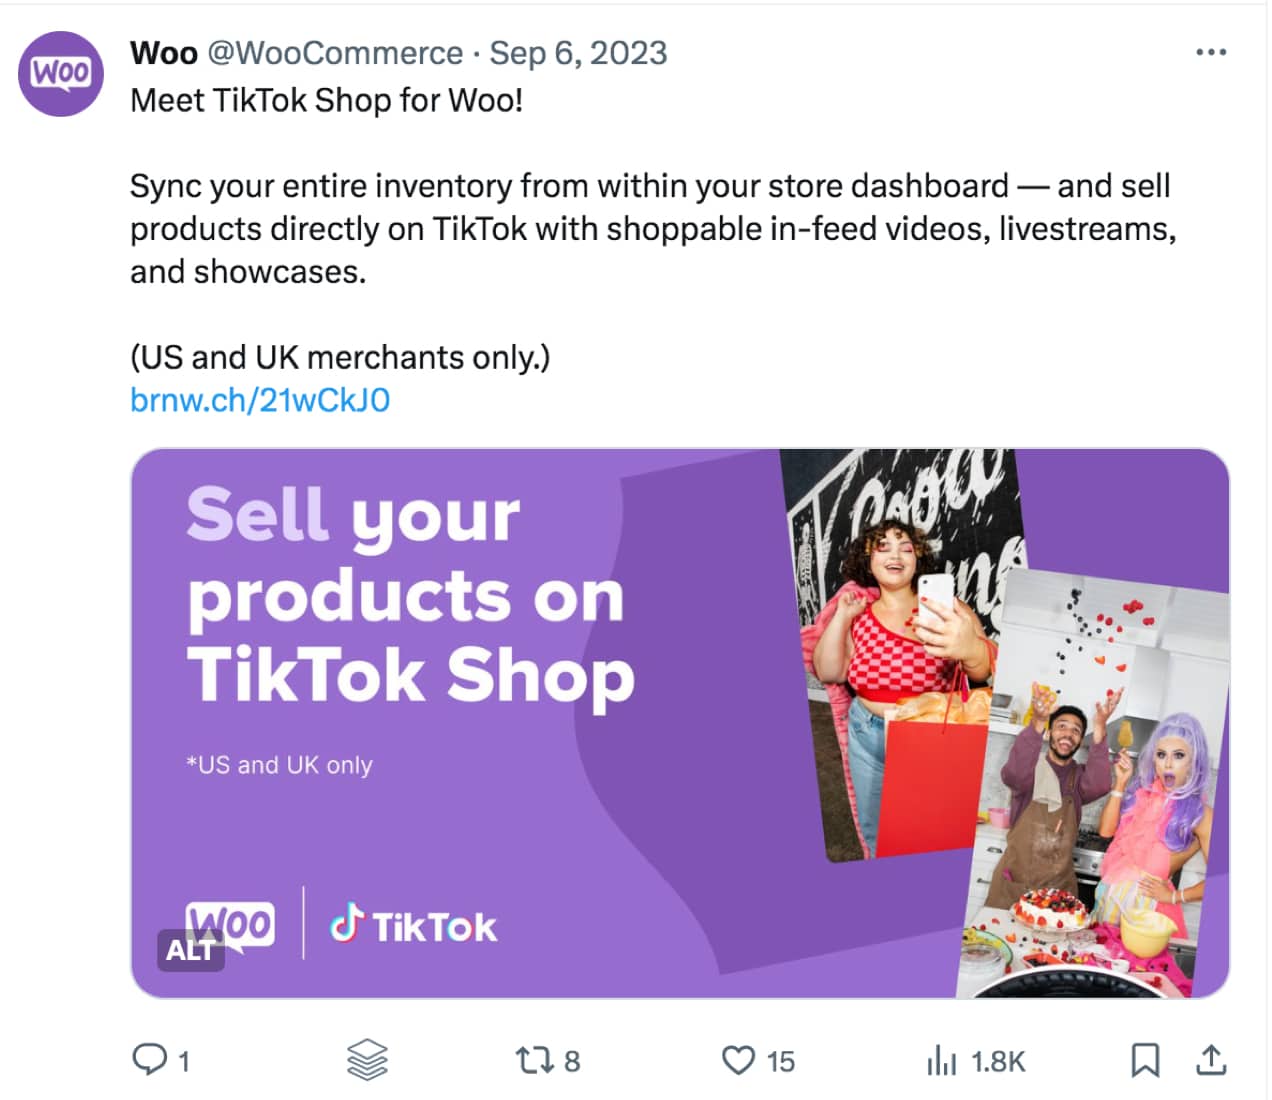 Instagram post from Woo announcing TikTok Shop